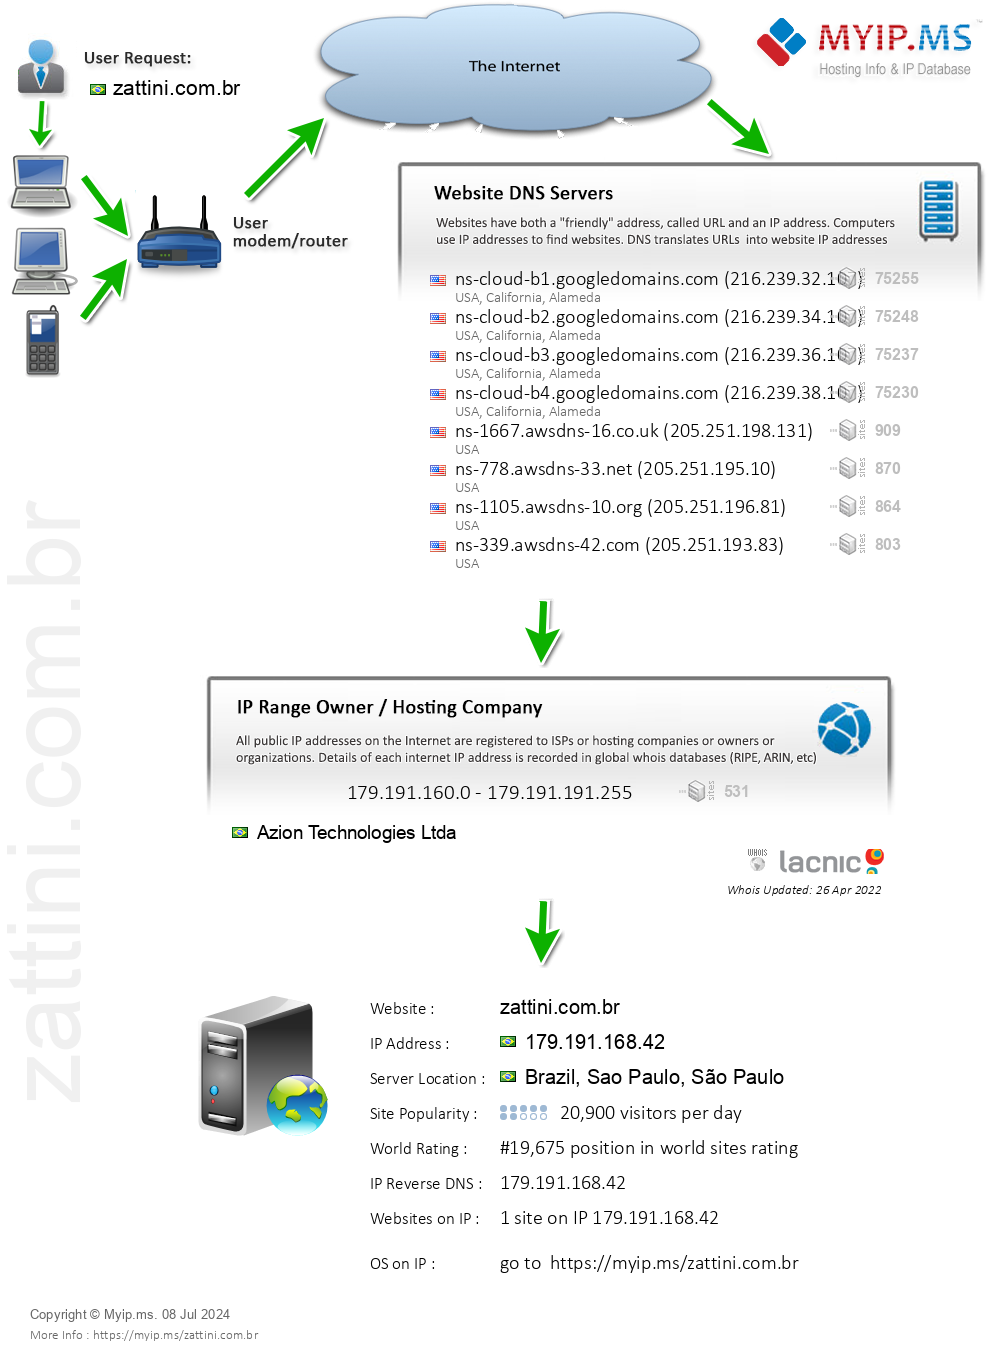 Zattini.com.br - Website Hosting Visual IP Diagram